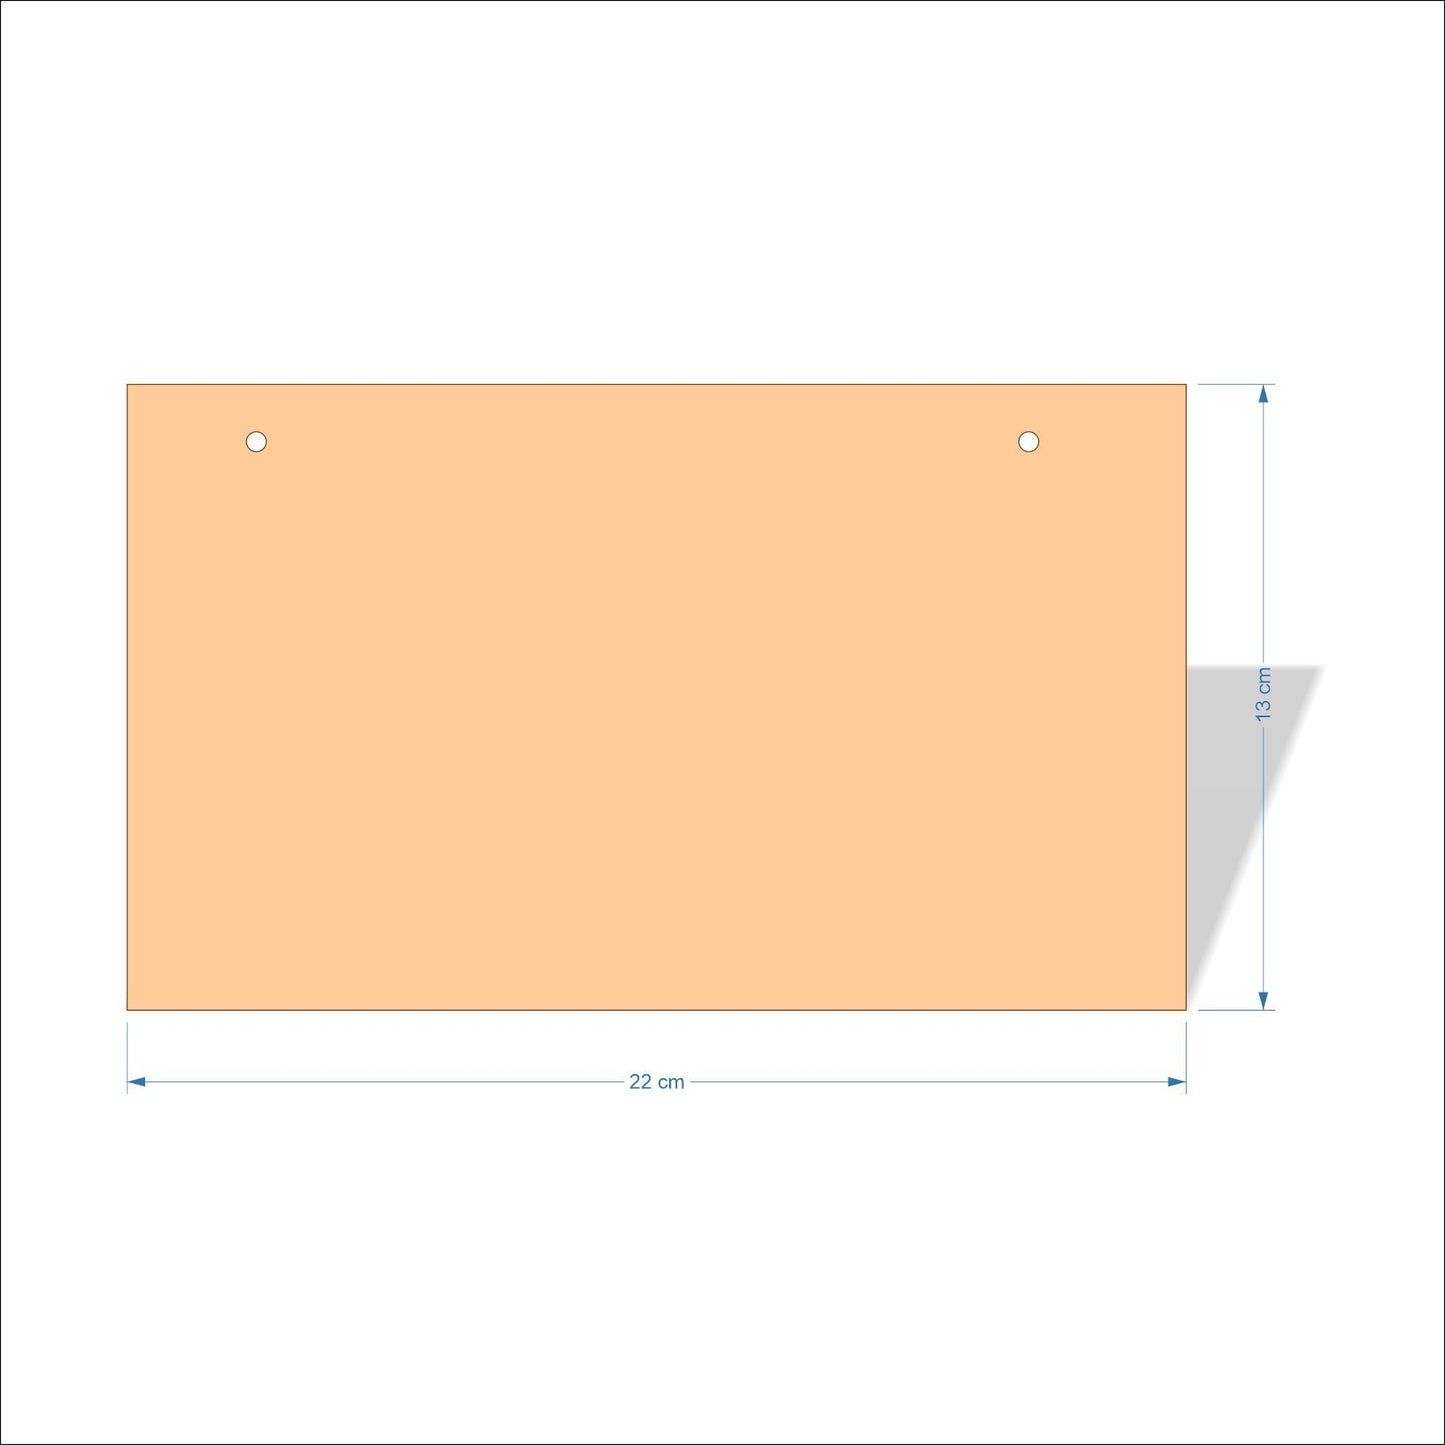 22 cm X 13 cm 3mm MDF Plaques with square corners